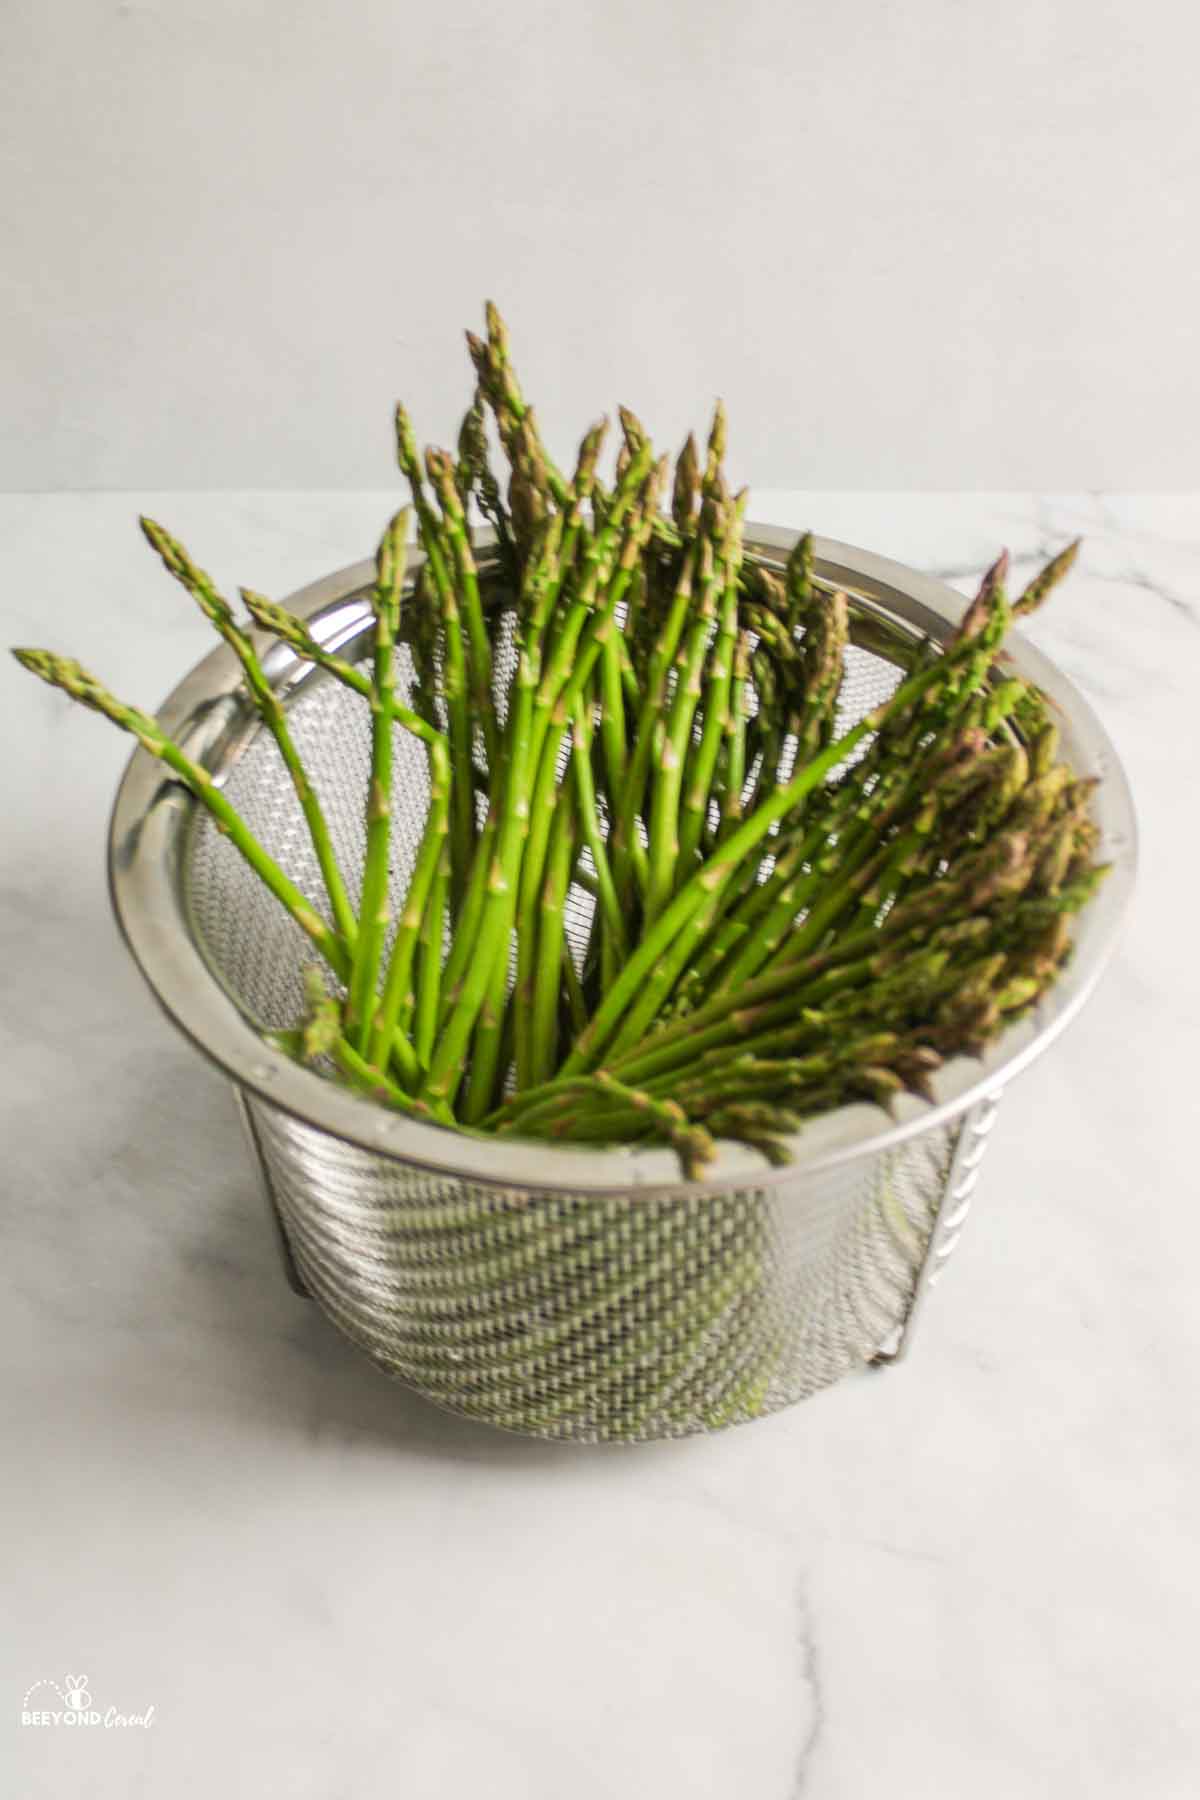 asparagus standing up in steamer basket